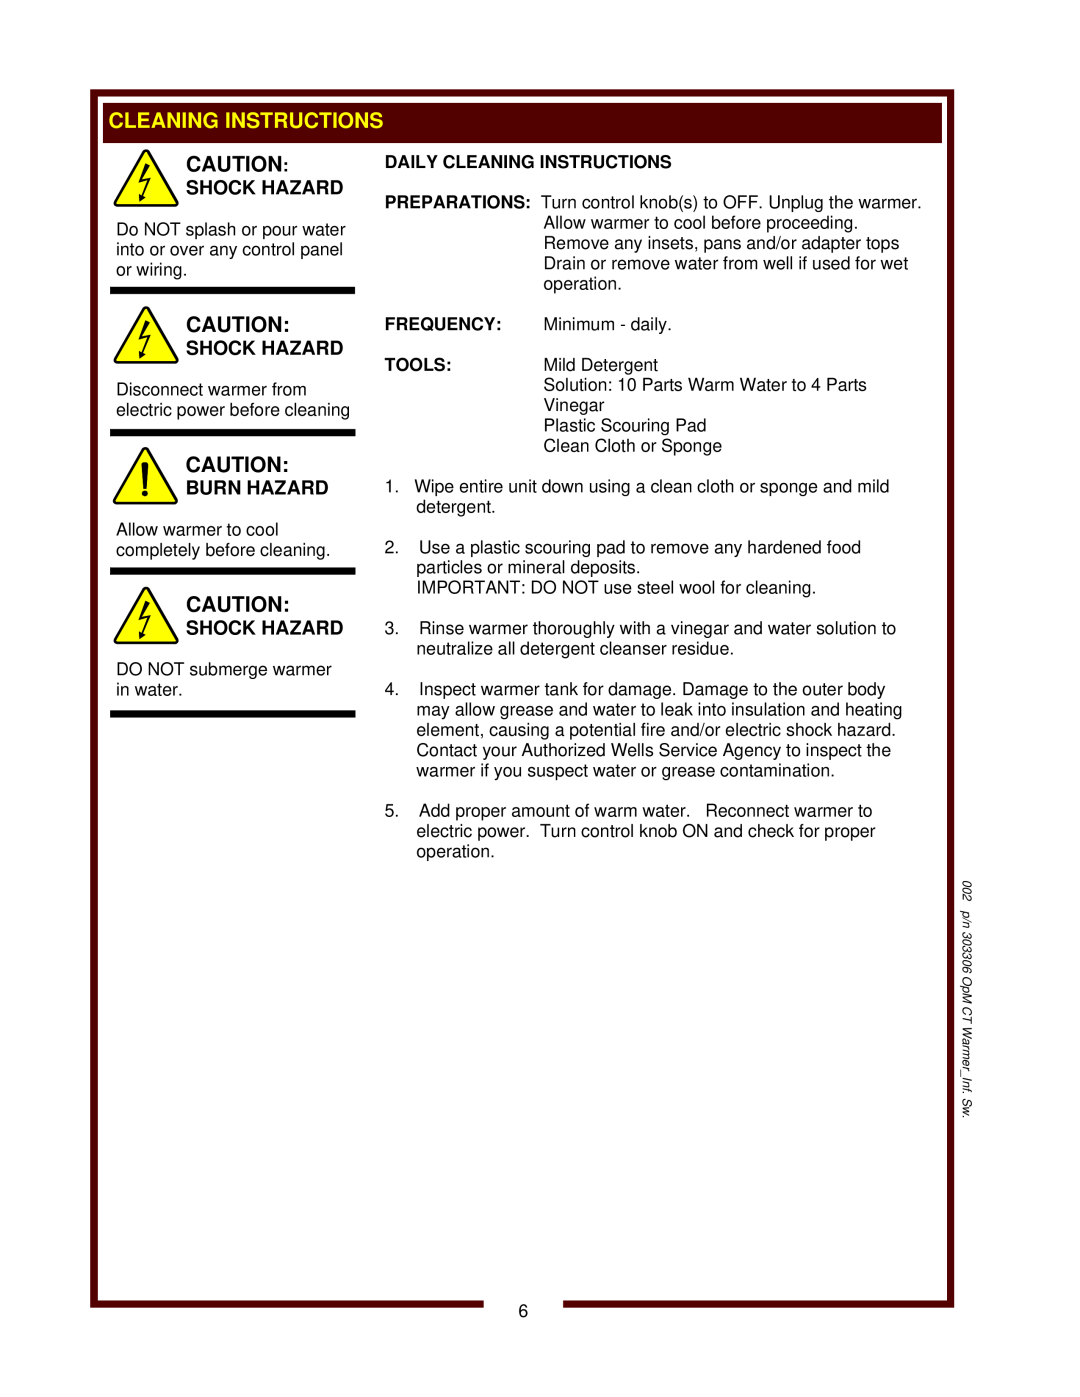 Wells SW-10 operation manual Shock Hazard, Burn Hazard, Daily Cleaning Instructions 